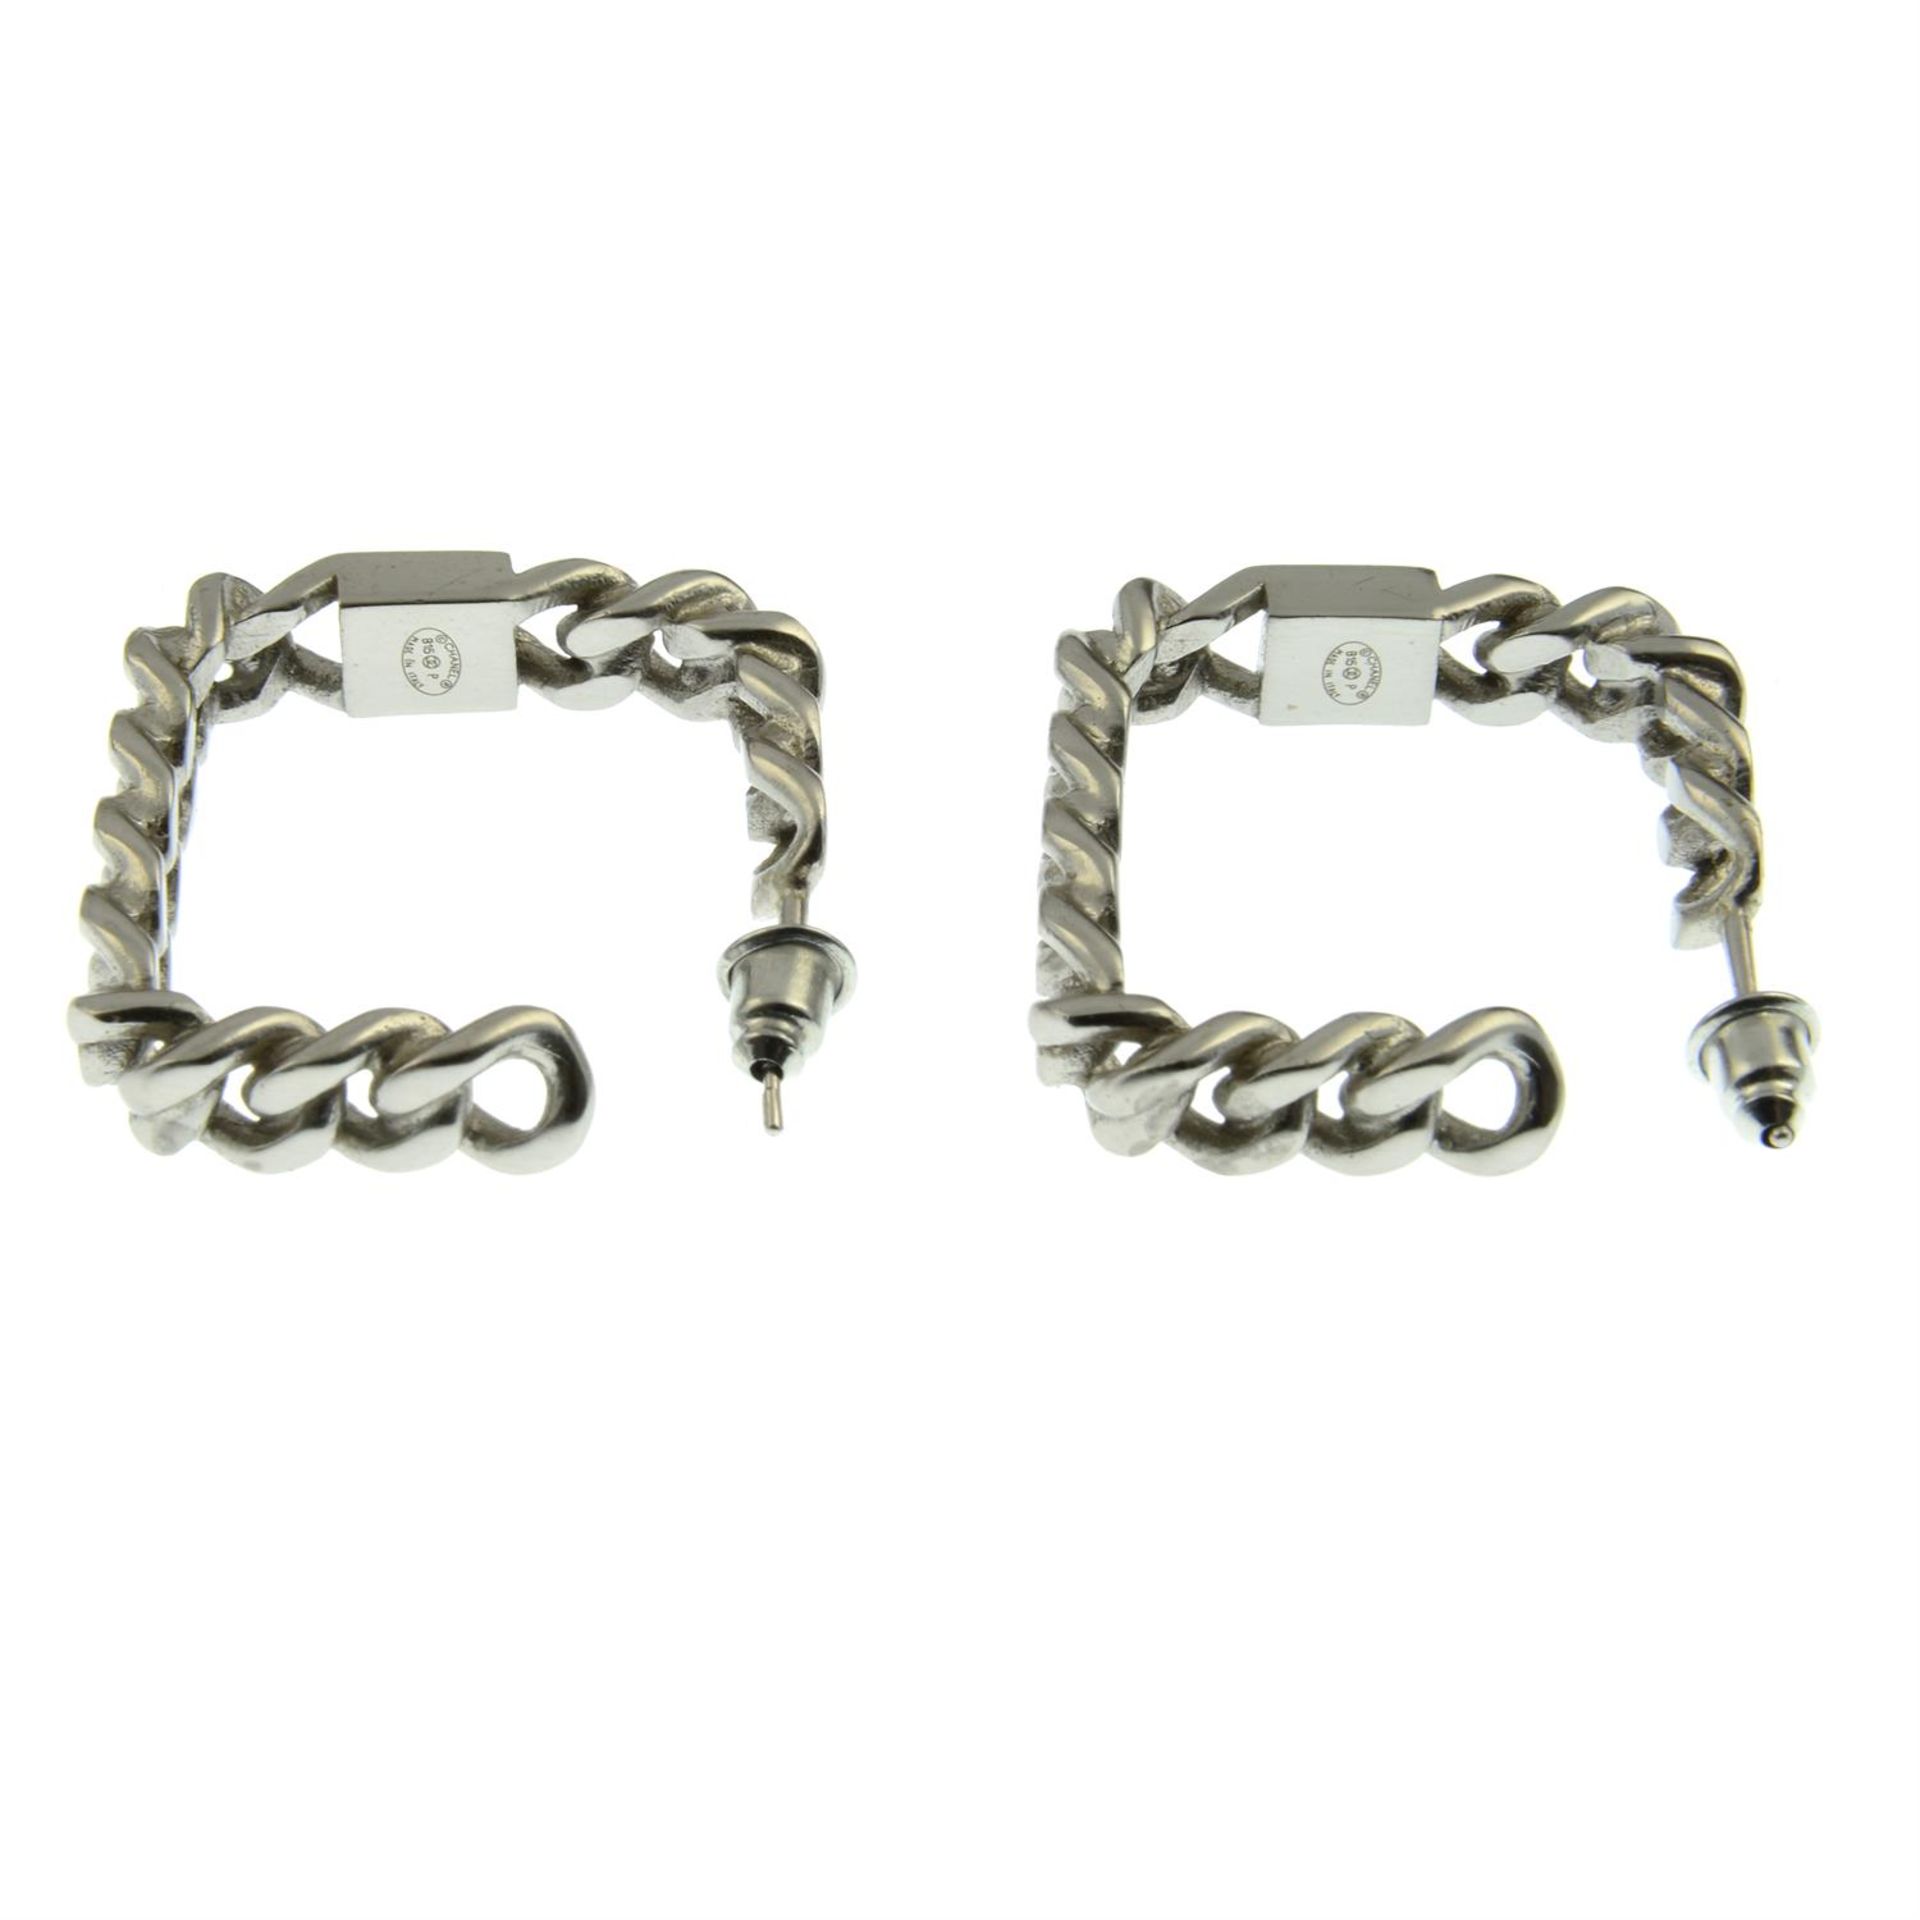 CHANEL - a pair of chain hoop earrings. - Image 3 of 4